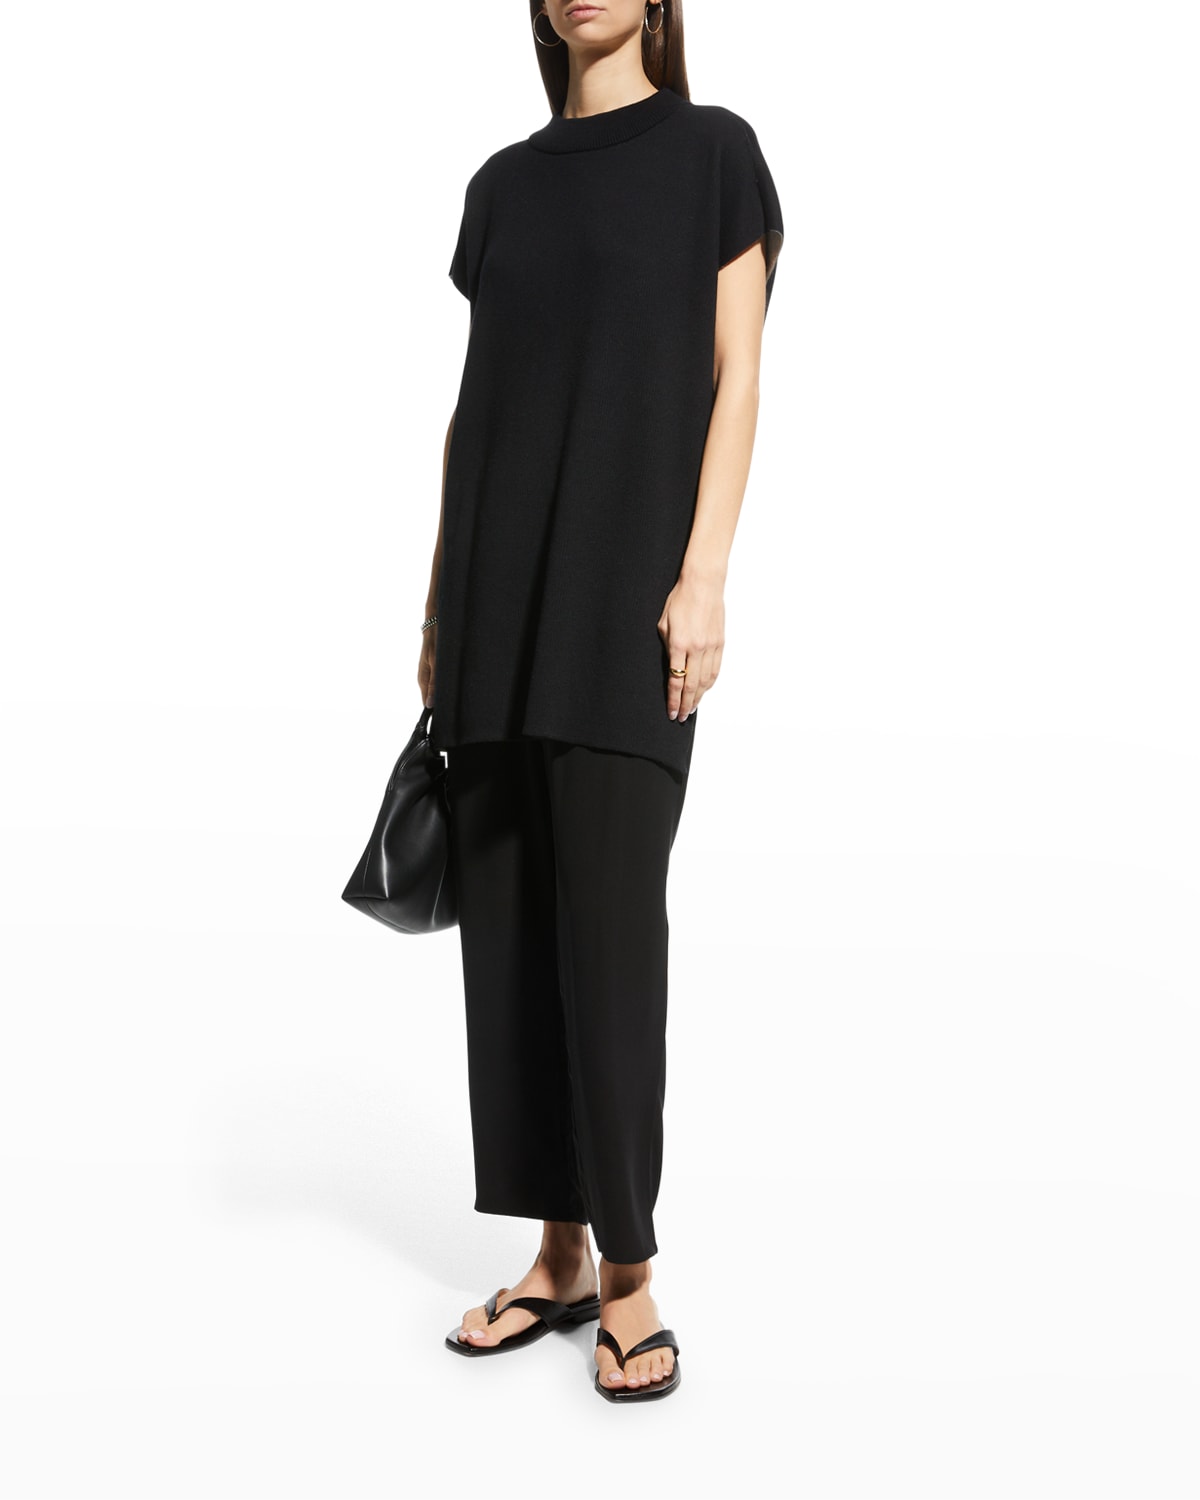 Eileen Fisher Black Bateau Neck Split Sleeve Silk Georgette Blouse Top M L XL